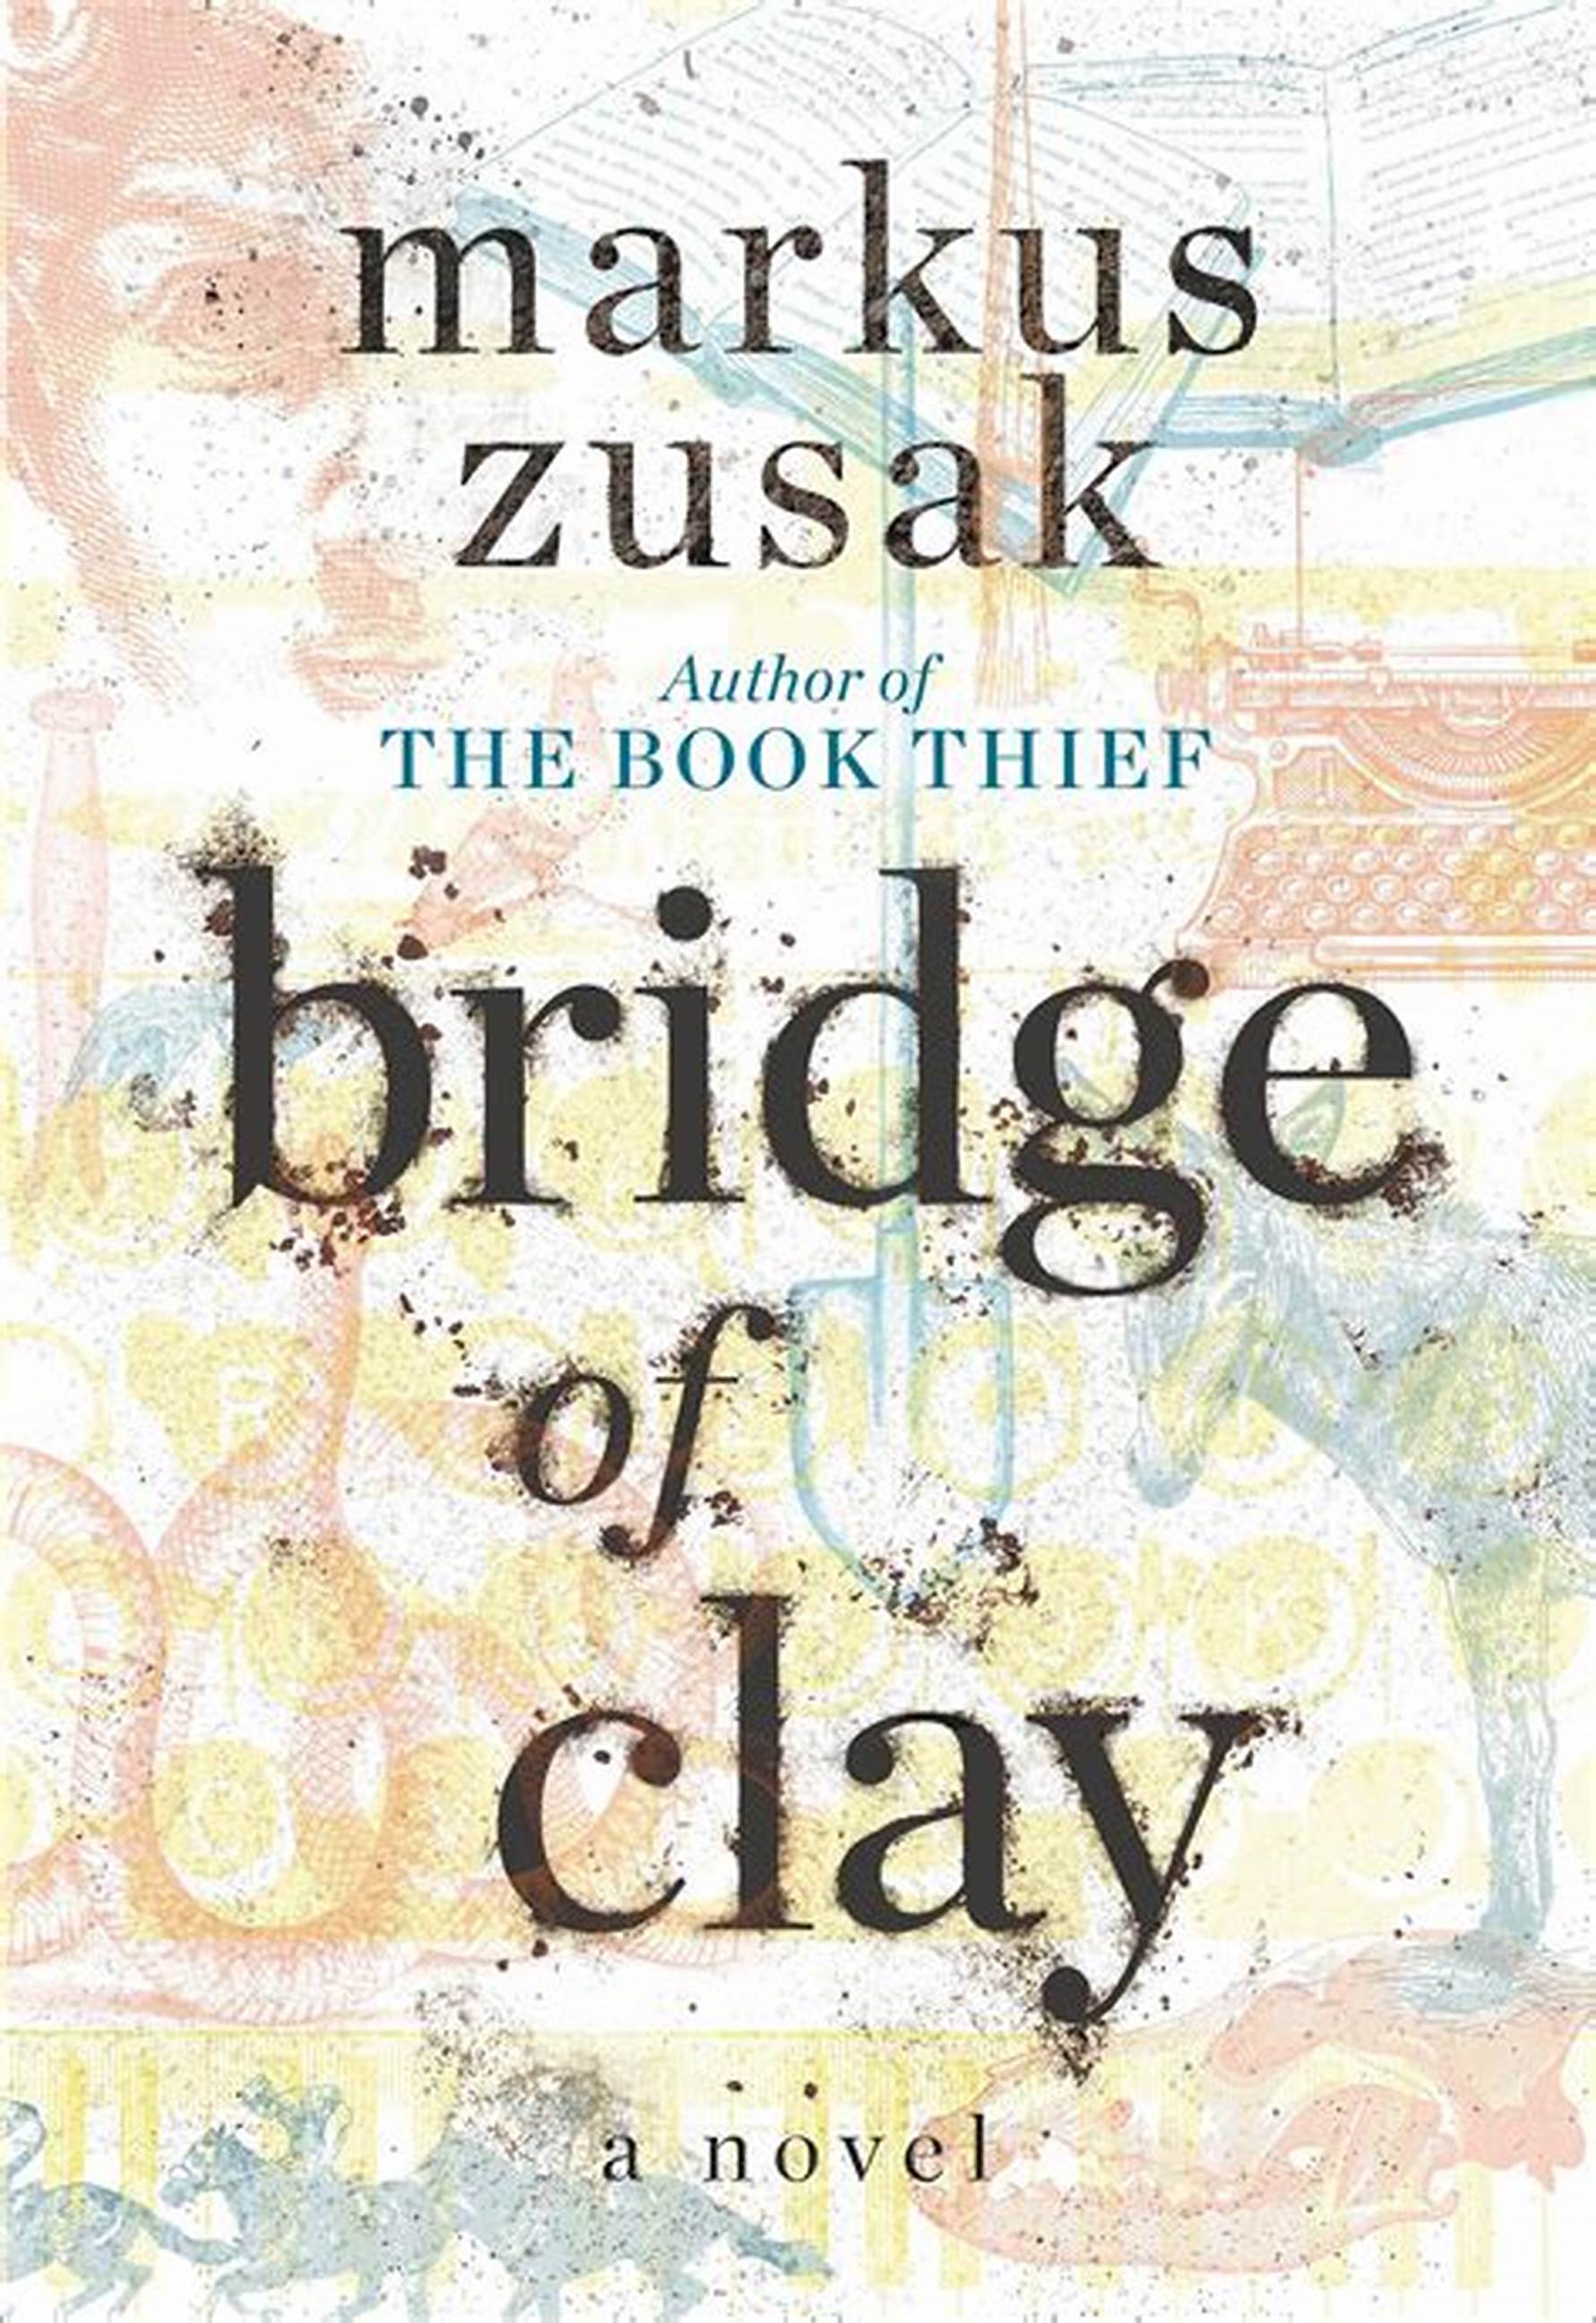 Zusak’s latest book moves readers